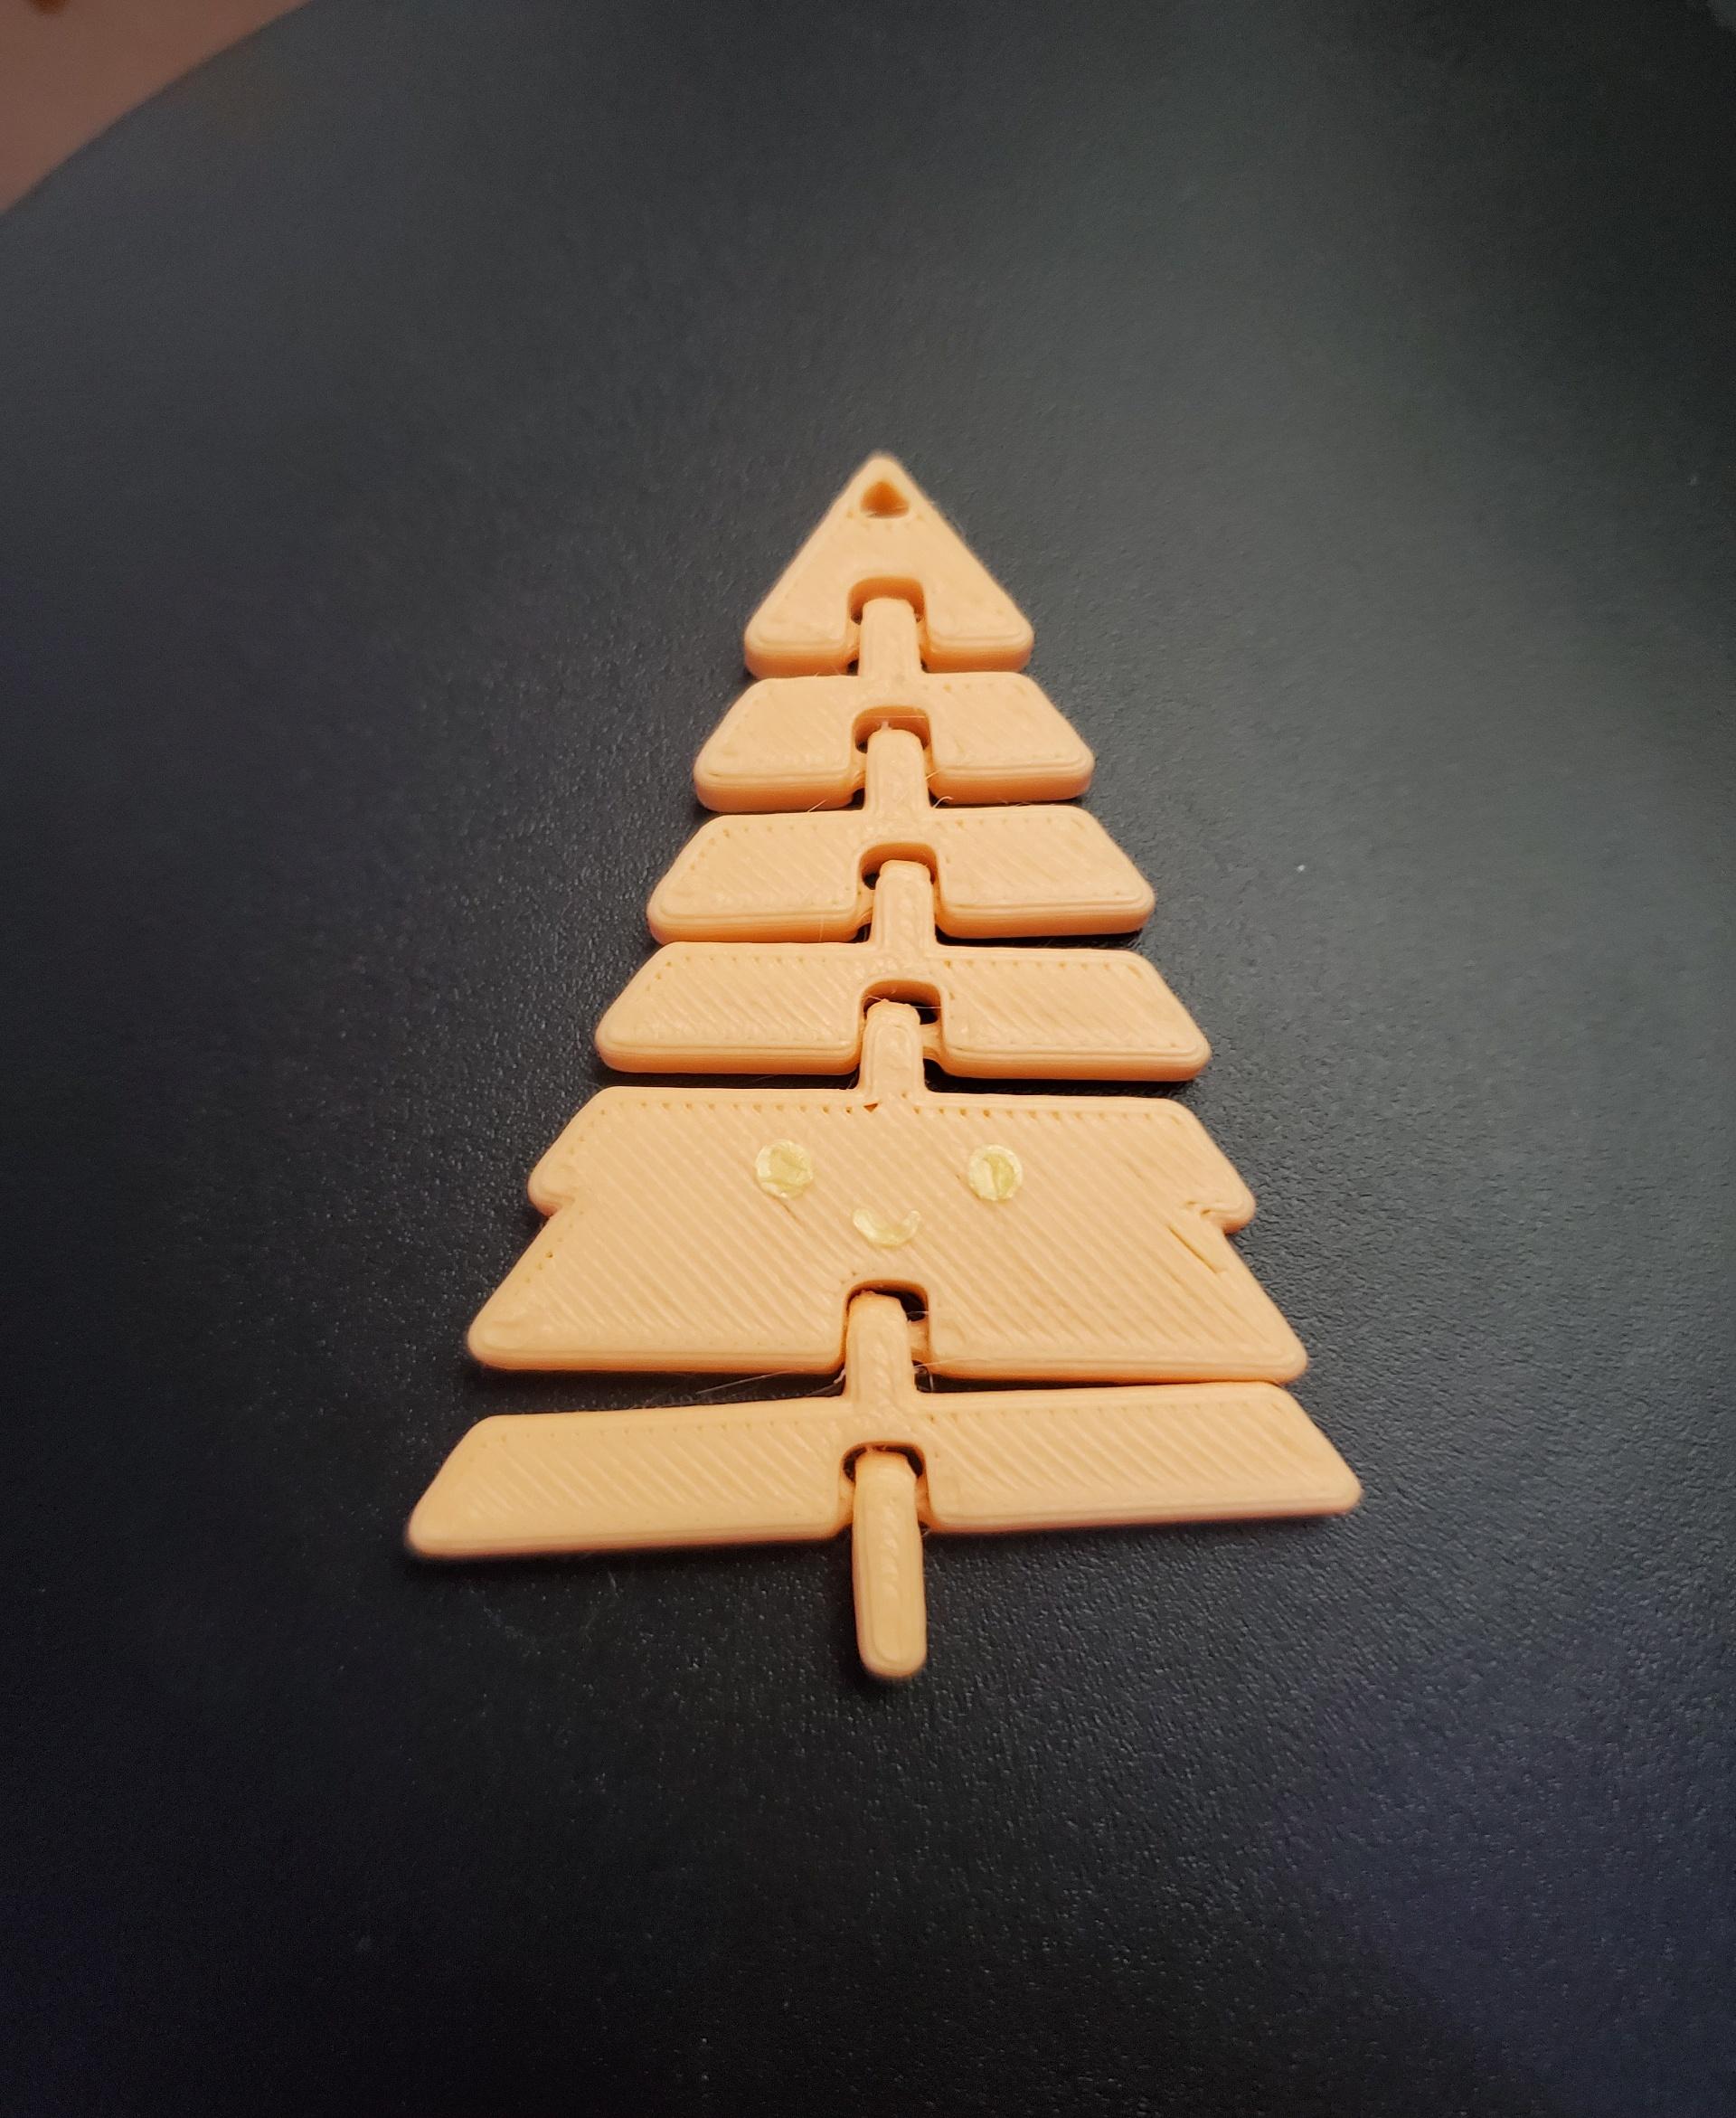 Articulated Kawaii Christmas Tree Keychain - Print in place fidget toy - 3mf - polyterra peach - 3d model